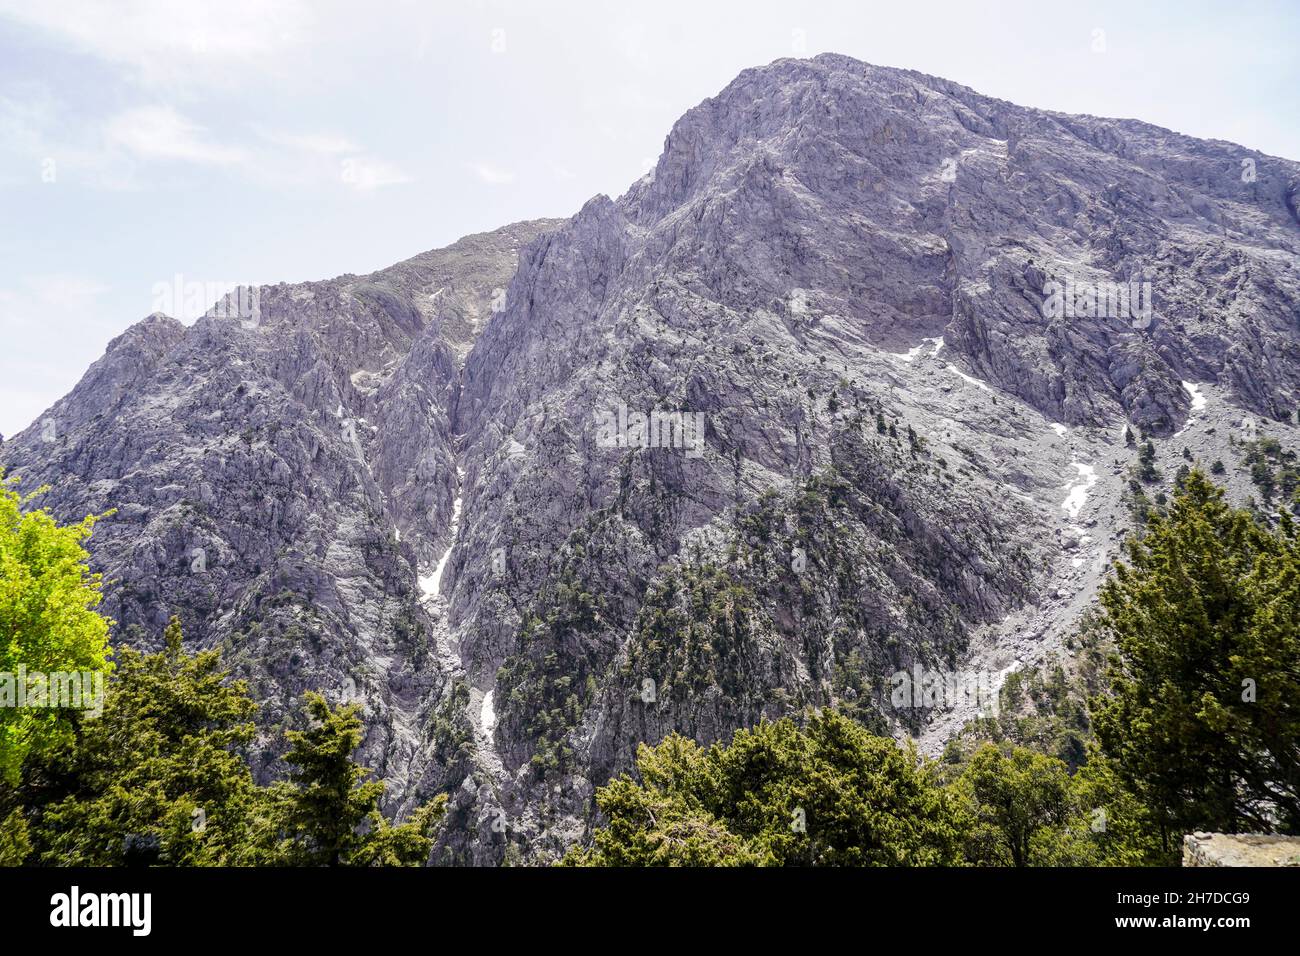 Cretan White Mountains National Park, Crete, Greece. A gorge of considerable geomorphological interest in the White Mountains of western Crete. A foot Stock Photo